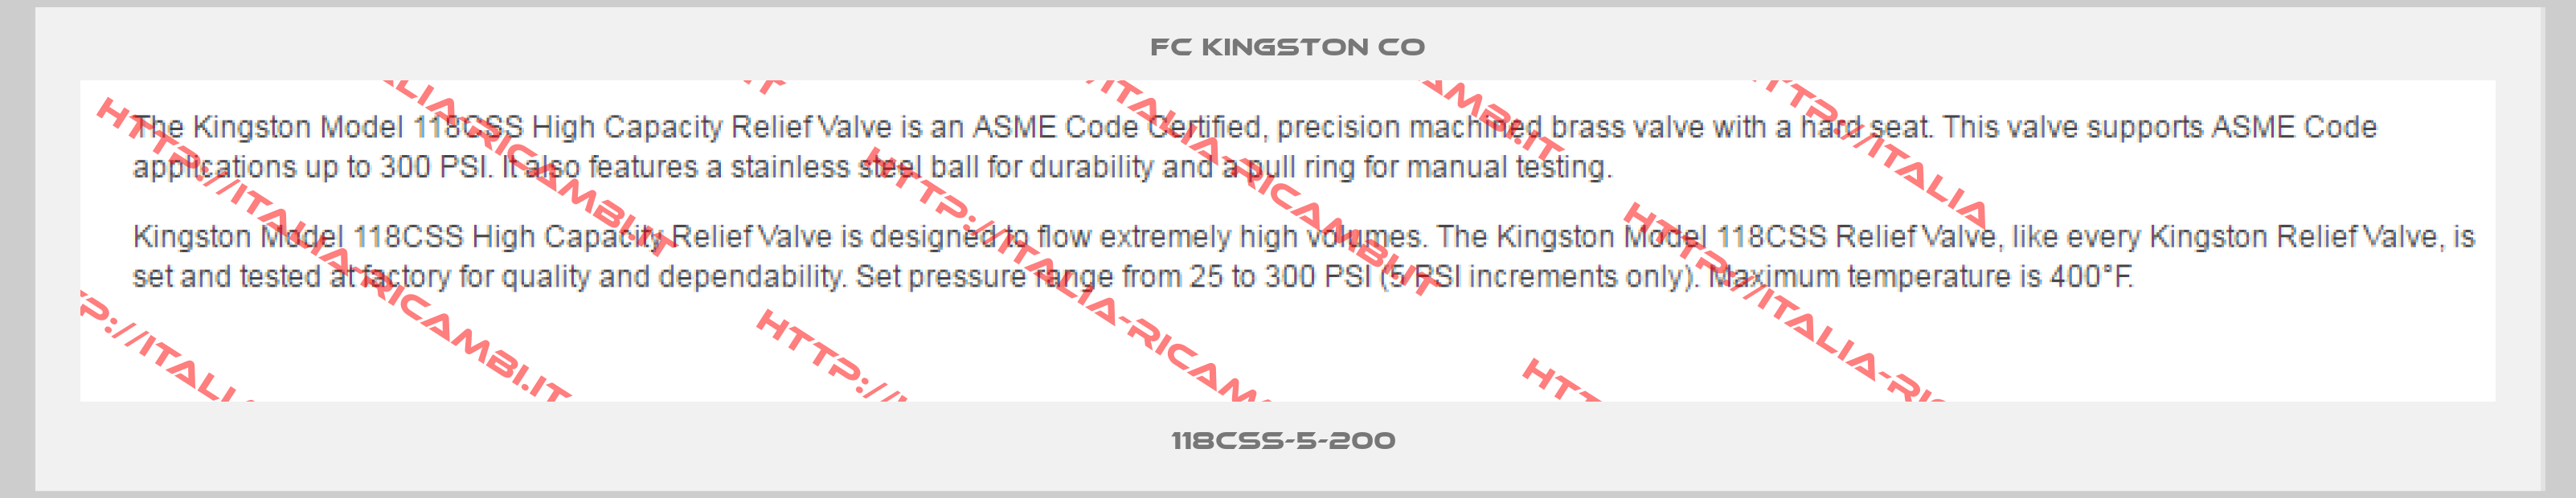 FC Kingston co-118CSS-5-200 